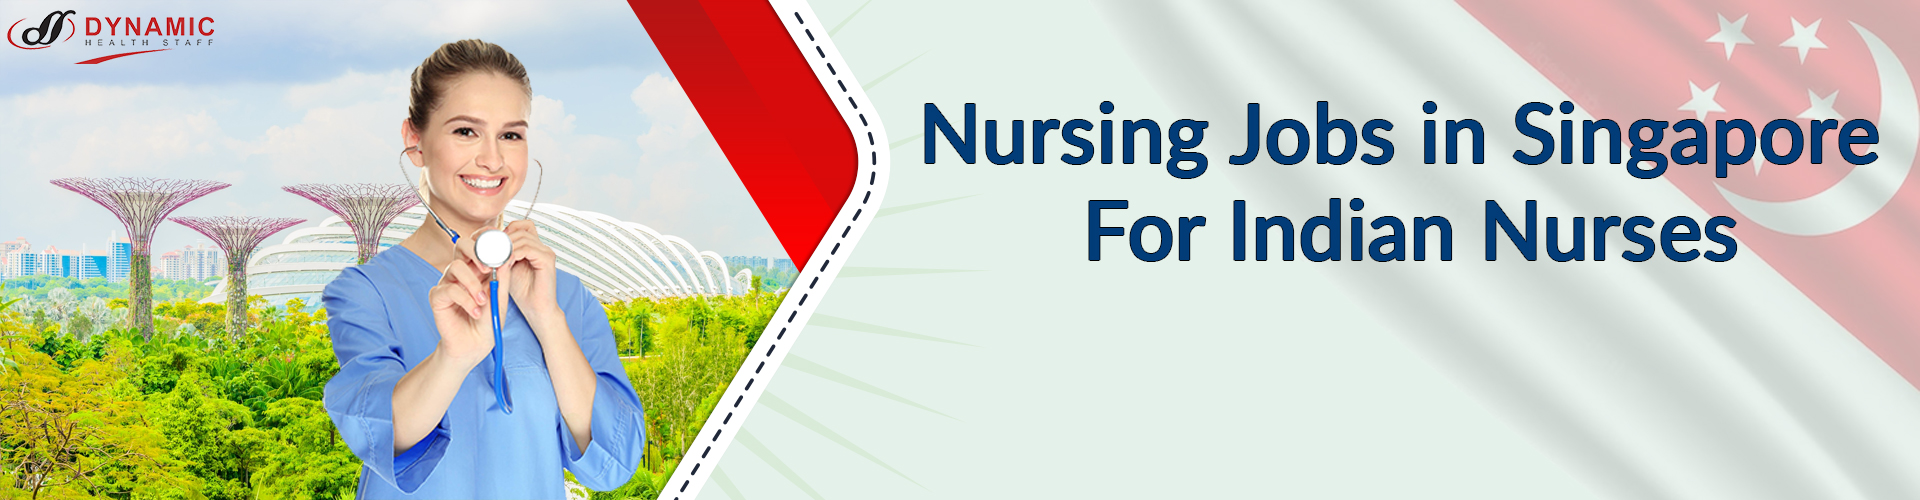 Nursing Jobs in Singapore For Indian Nurses